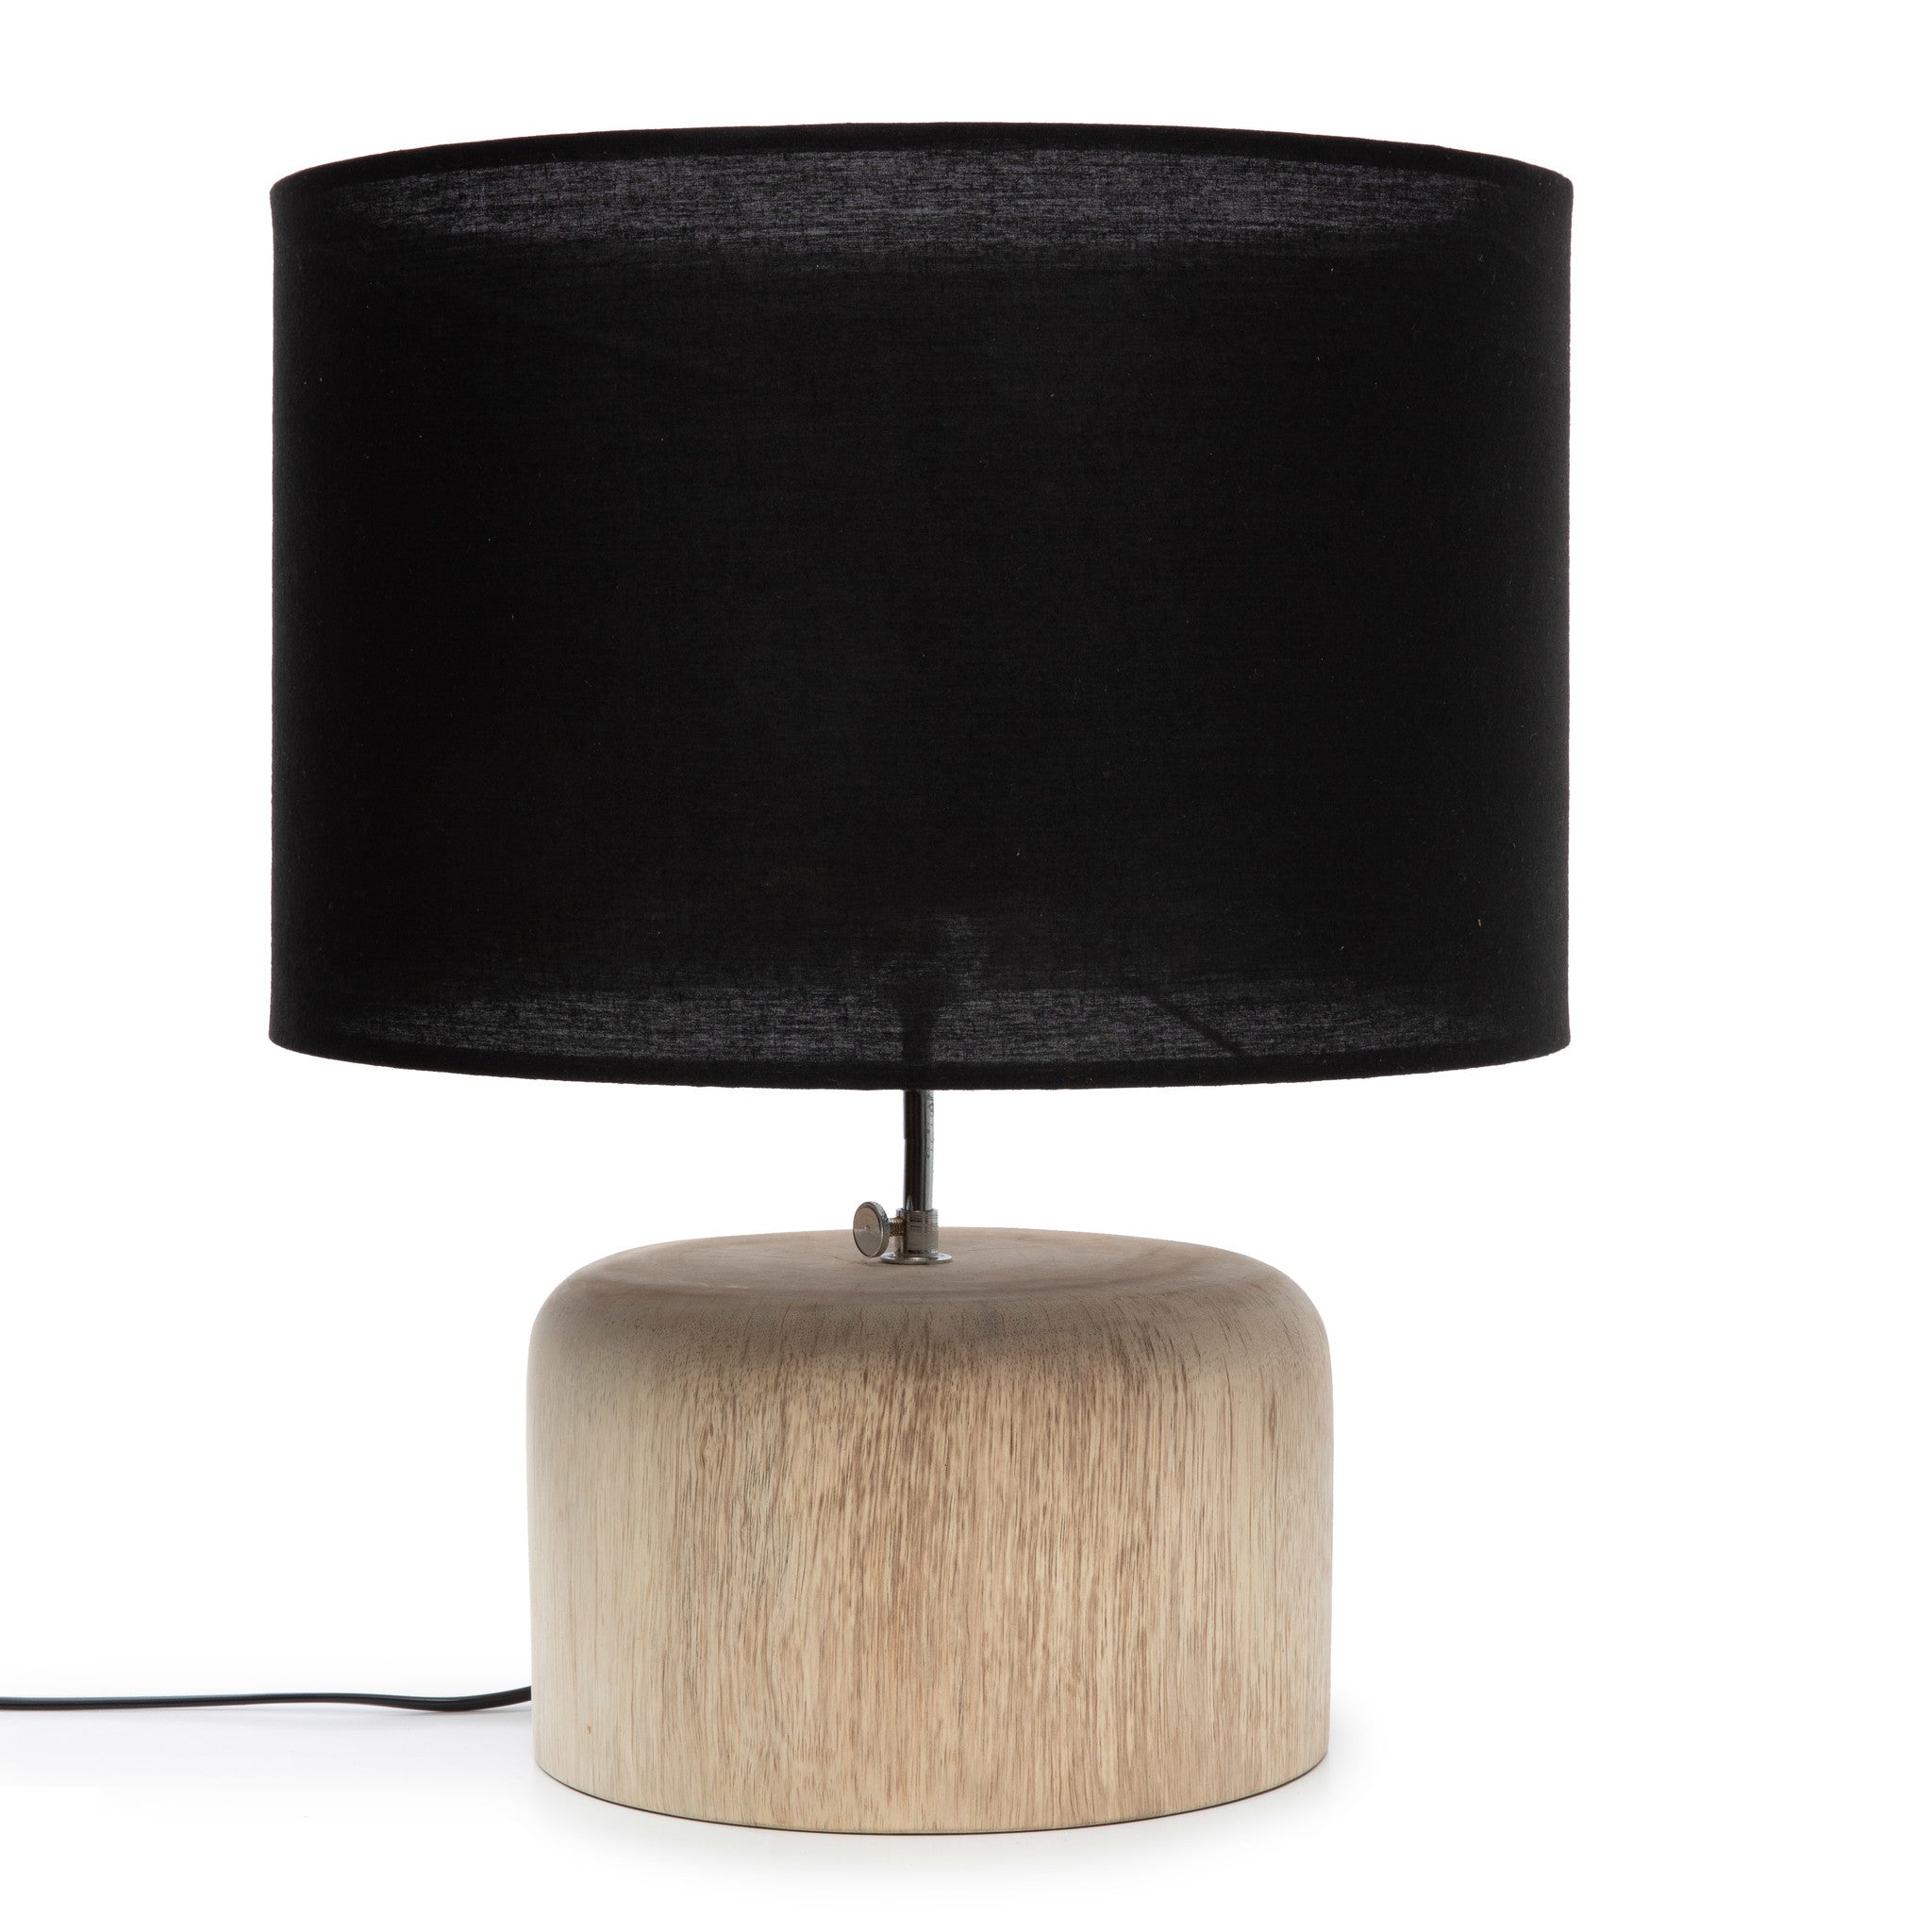 The table lamp in teak wood - Natural black